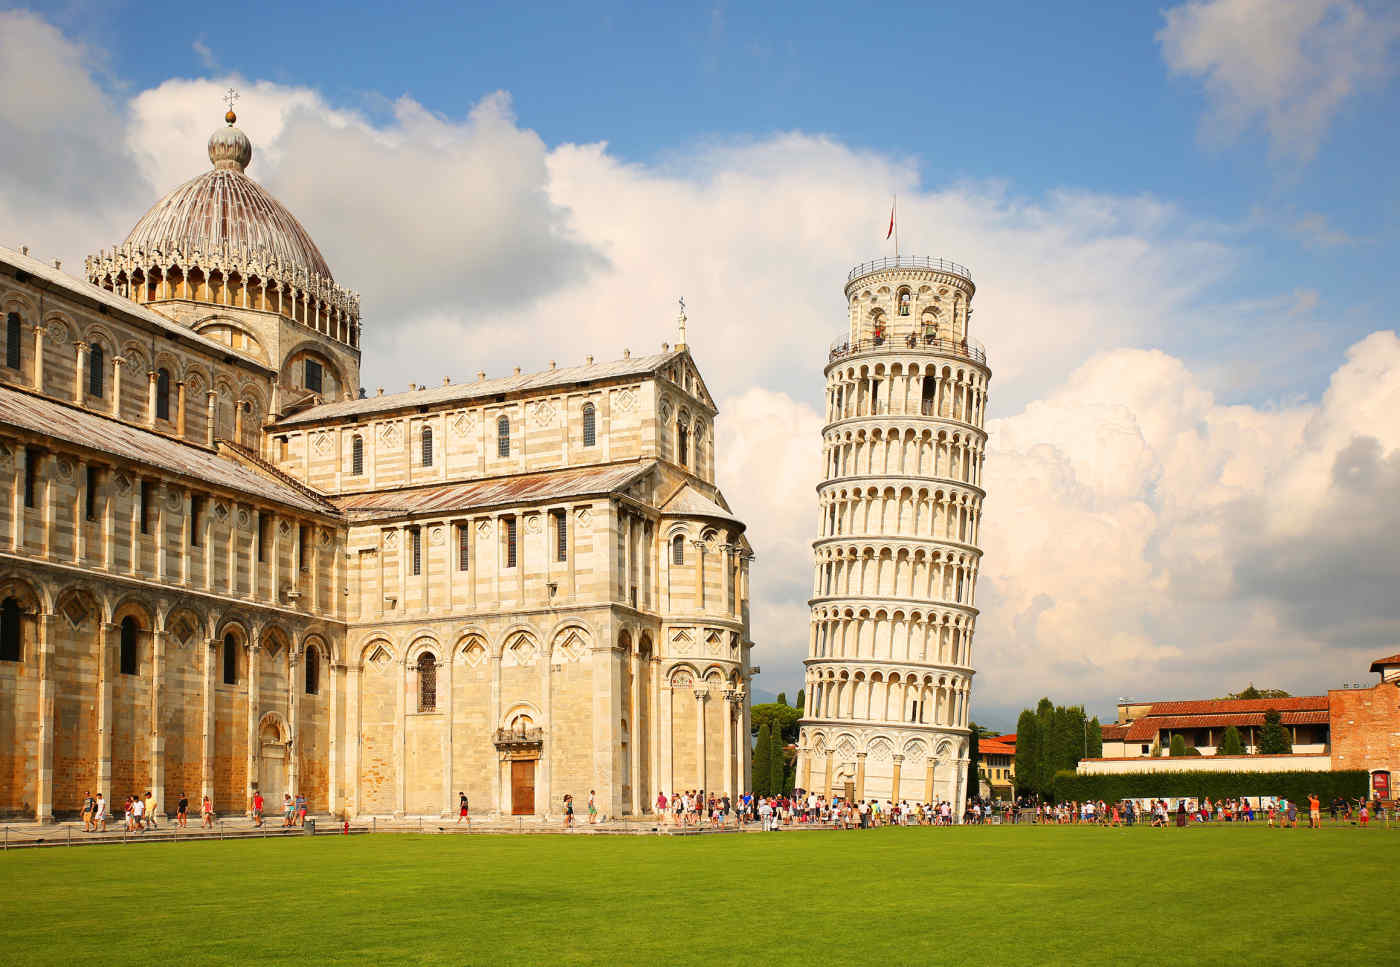 Leaning Tower of Pisa in Pisa, Italy